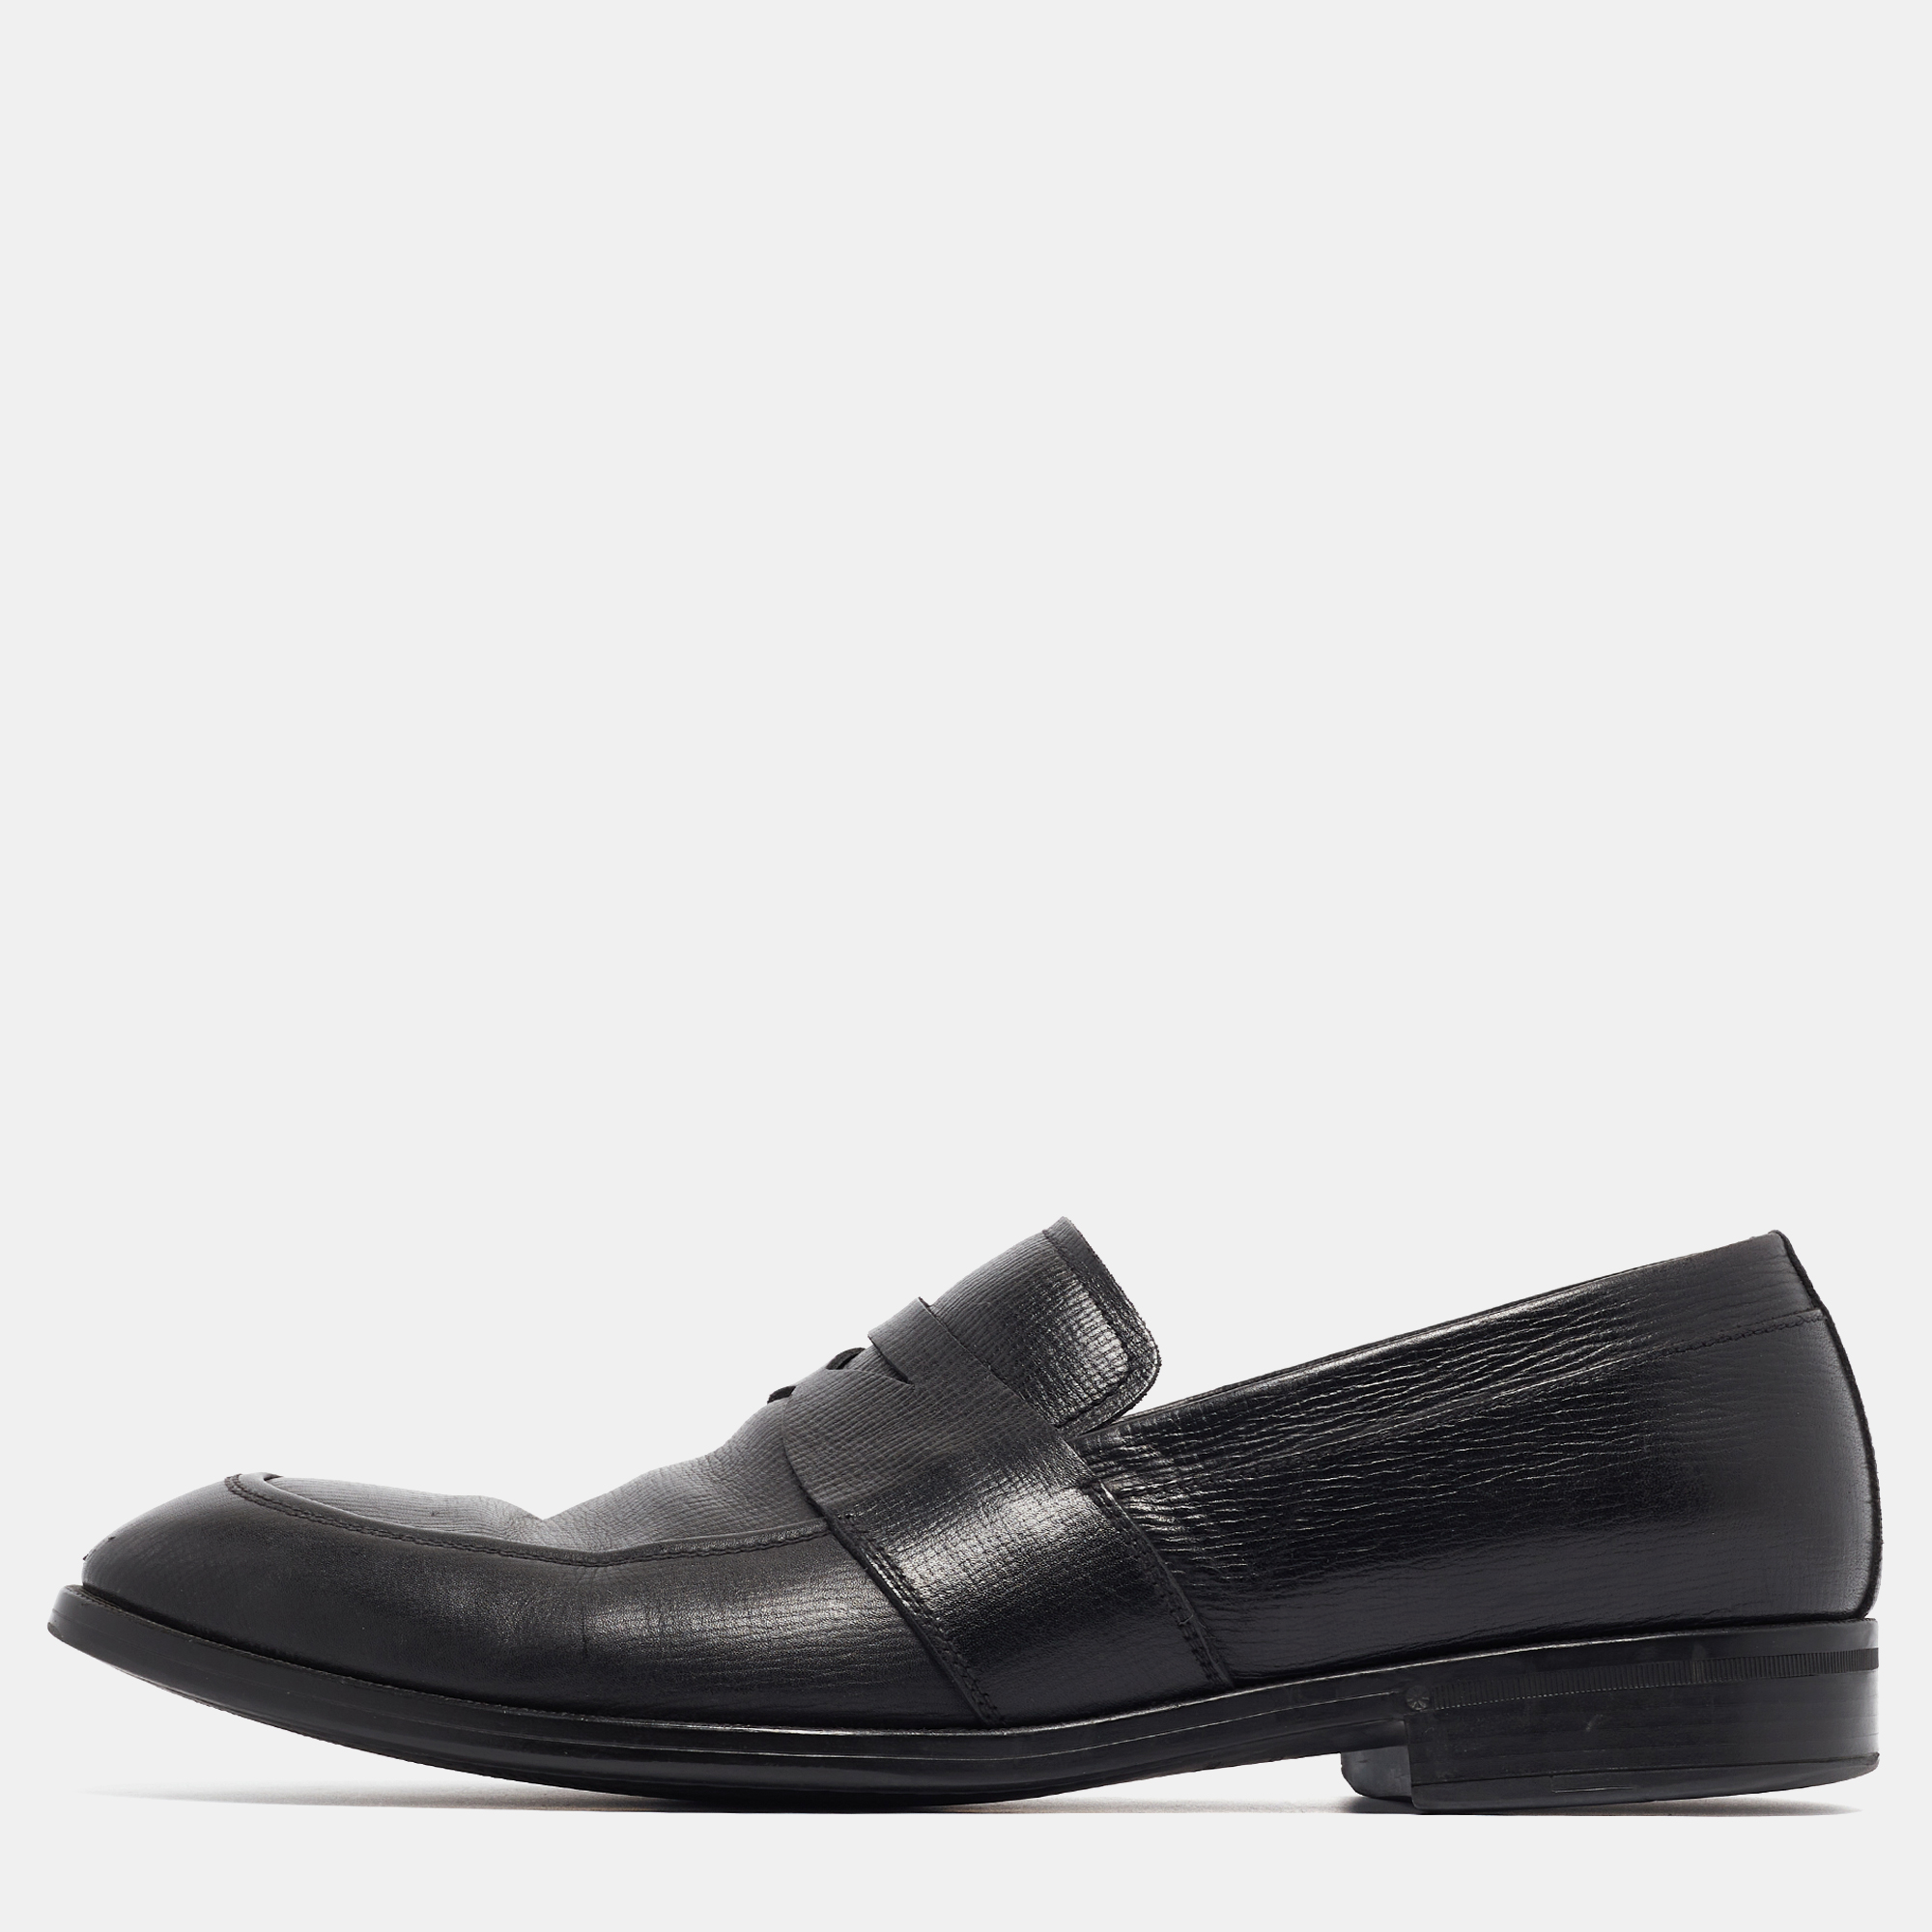 Ermenegildo zegna black leather slip on loafers size 45.5